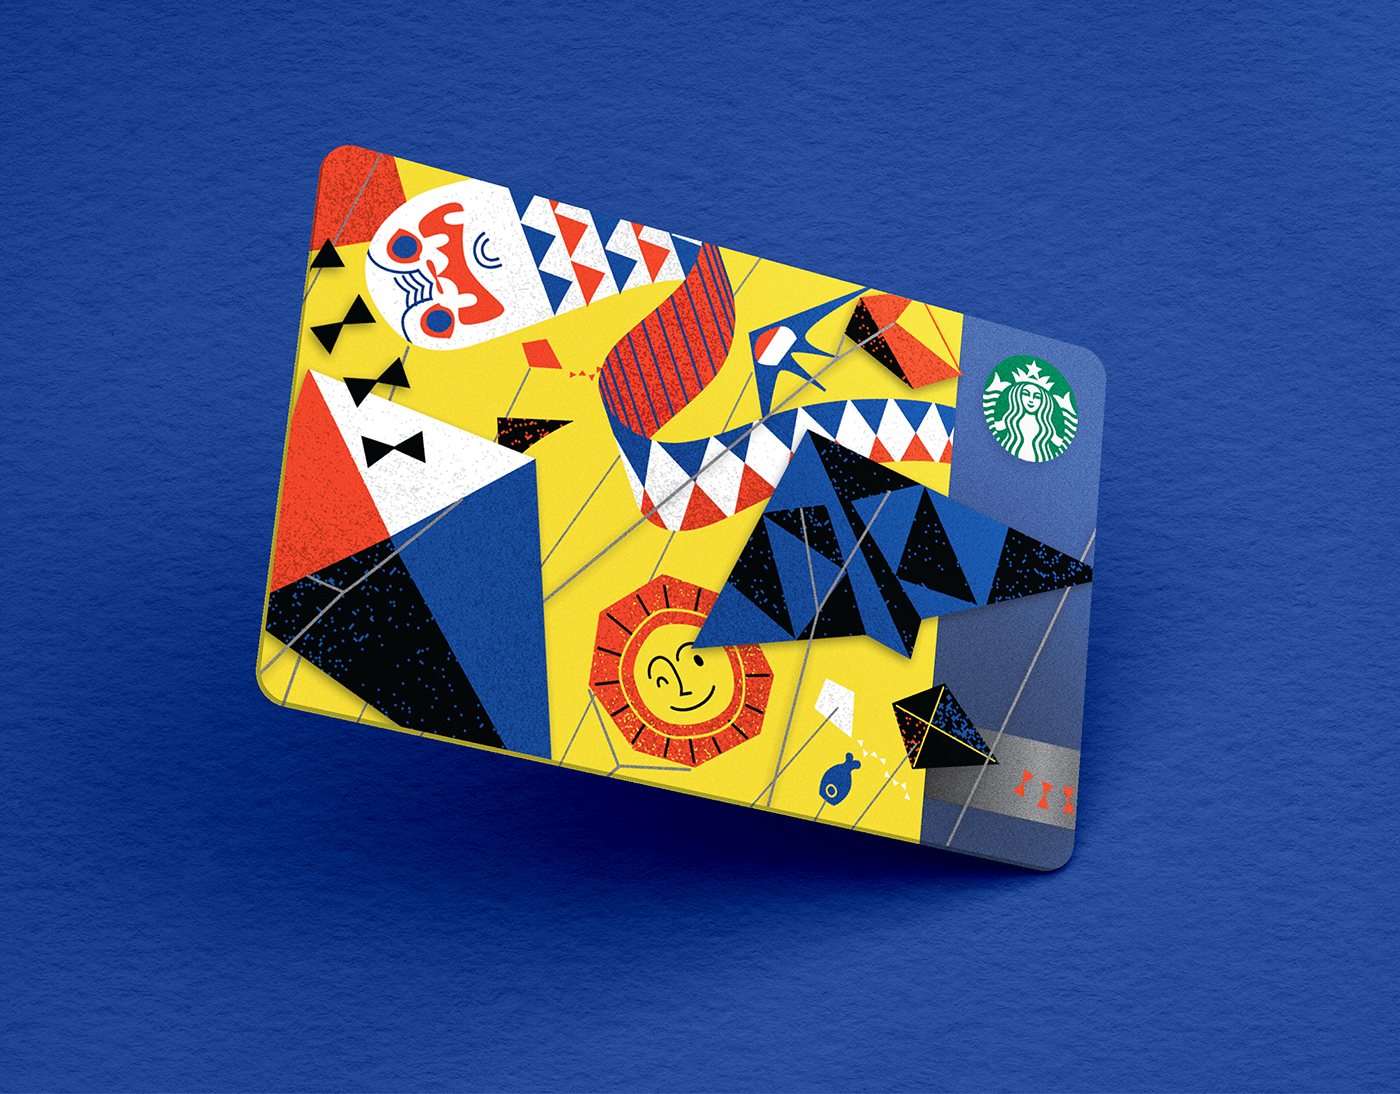 starbucks coffee gift card design and illustration mockup by chelsea wirtz studio 